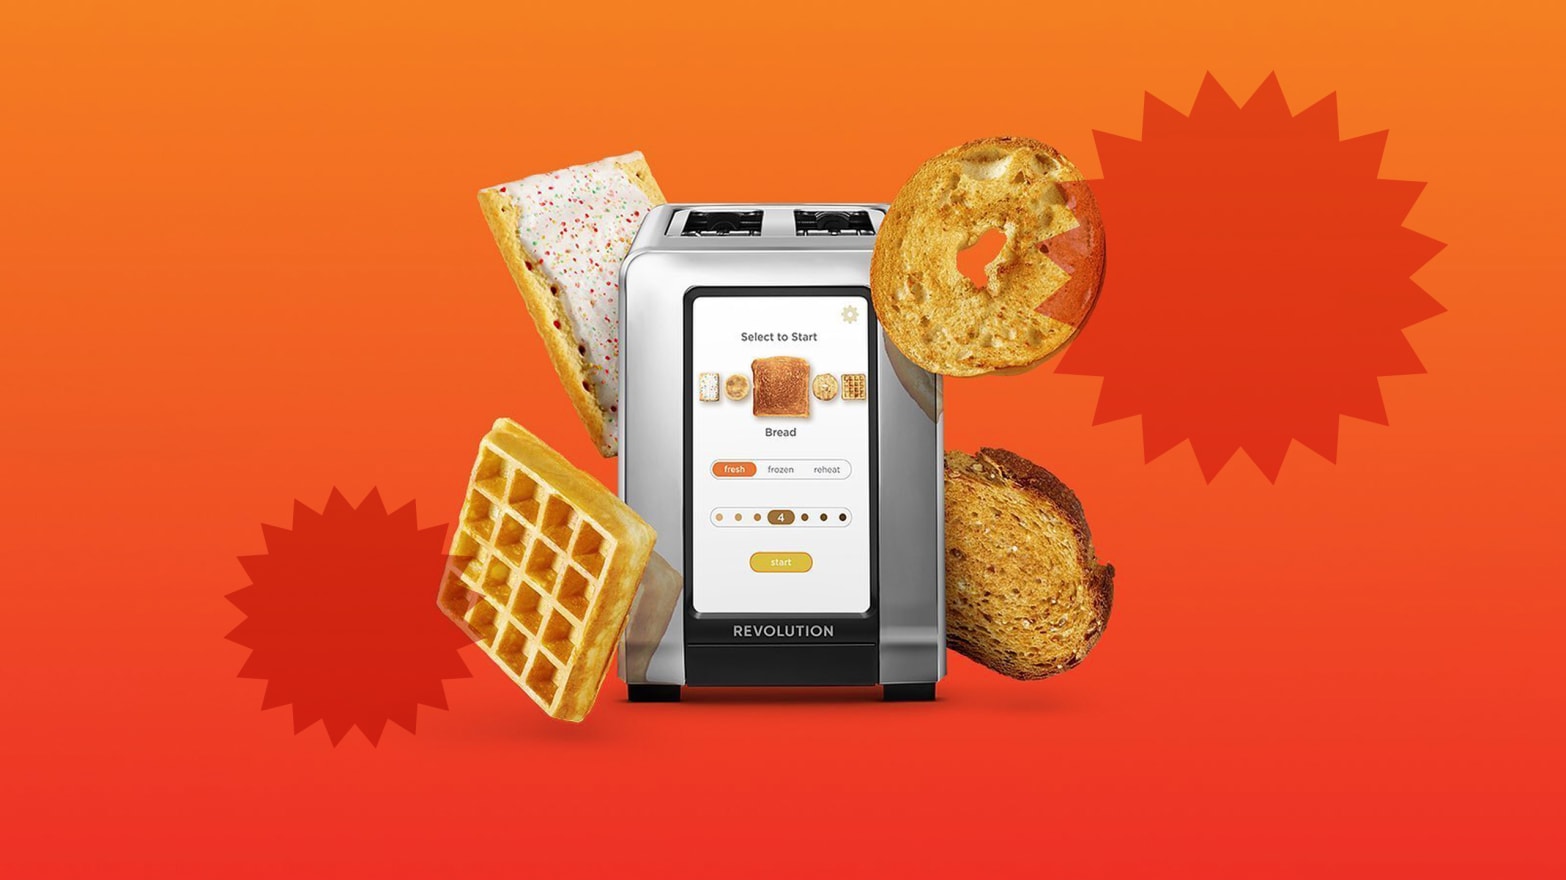 Revolution Toaster Sale Price 2022